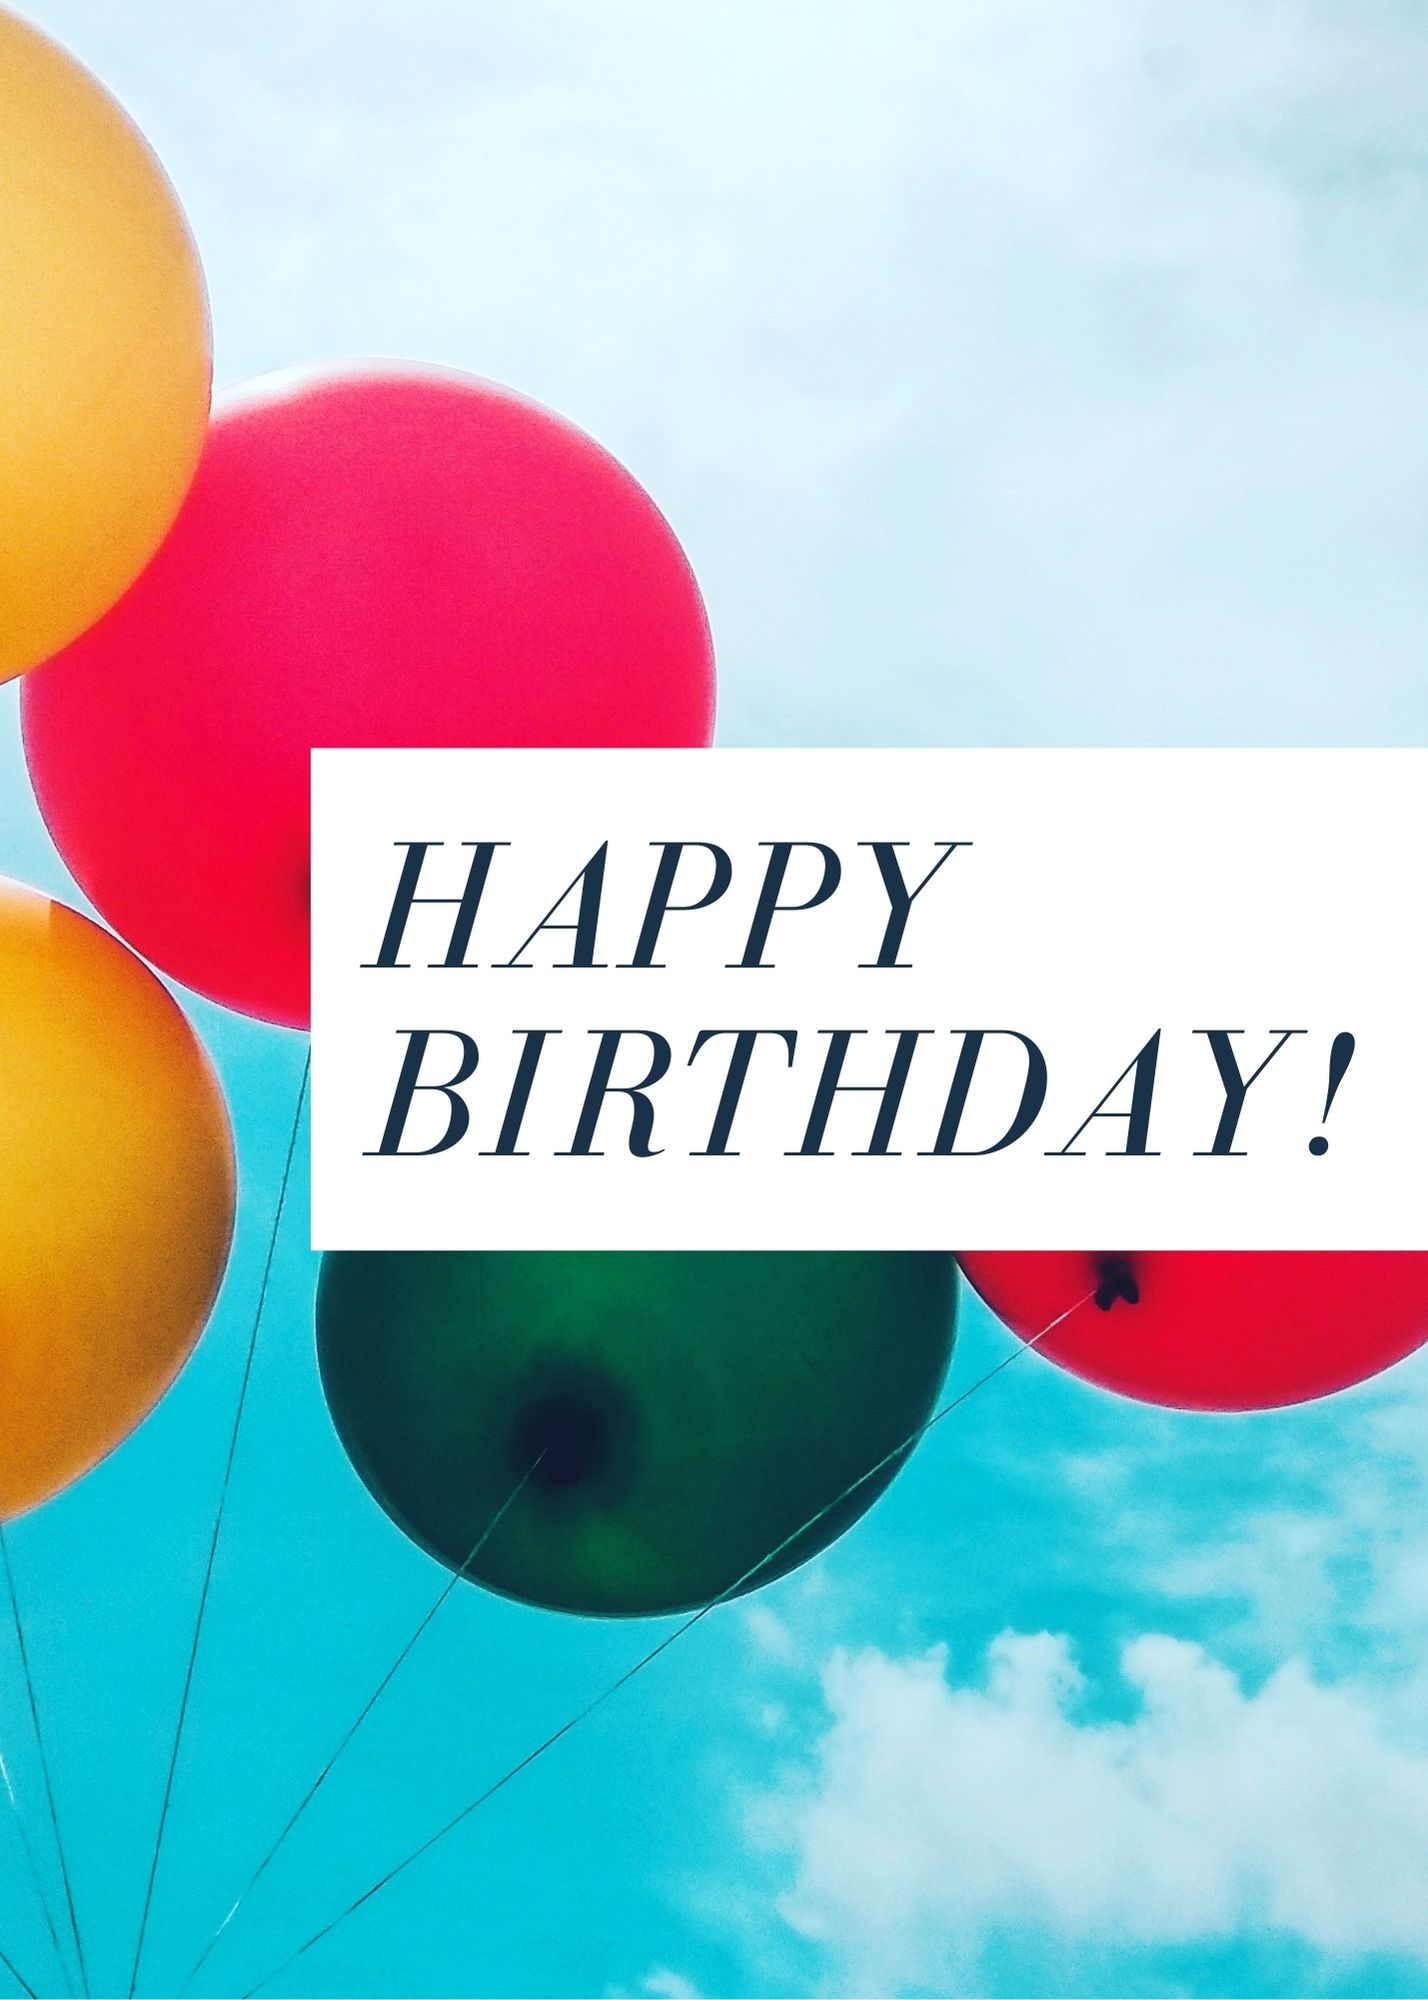 Gifting: Creating a Birthday Wishlist for You!